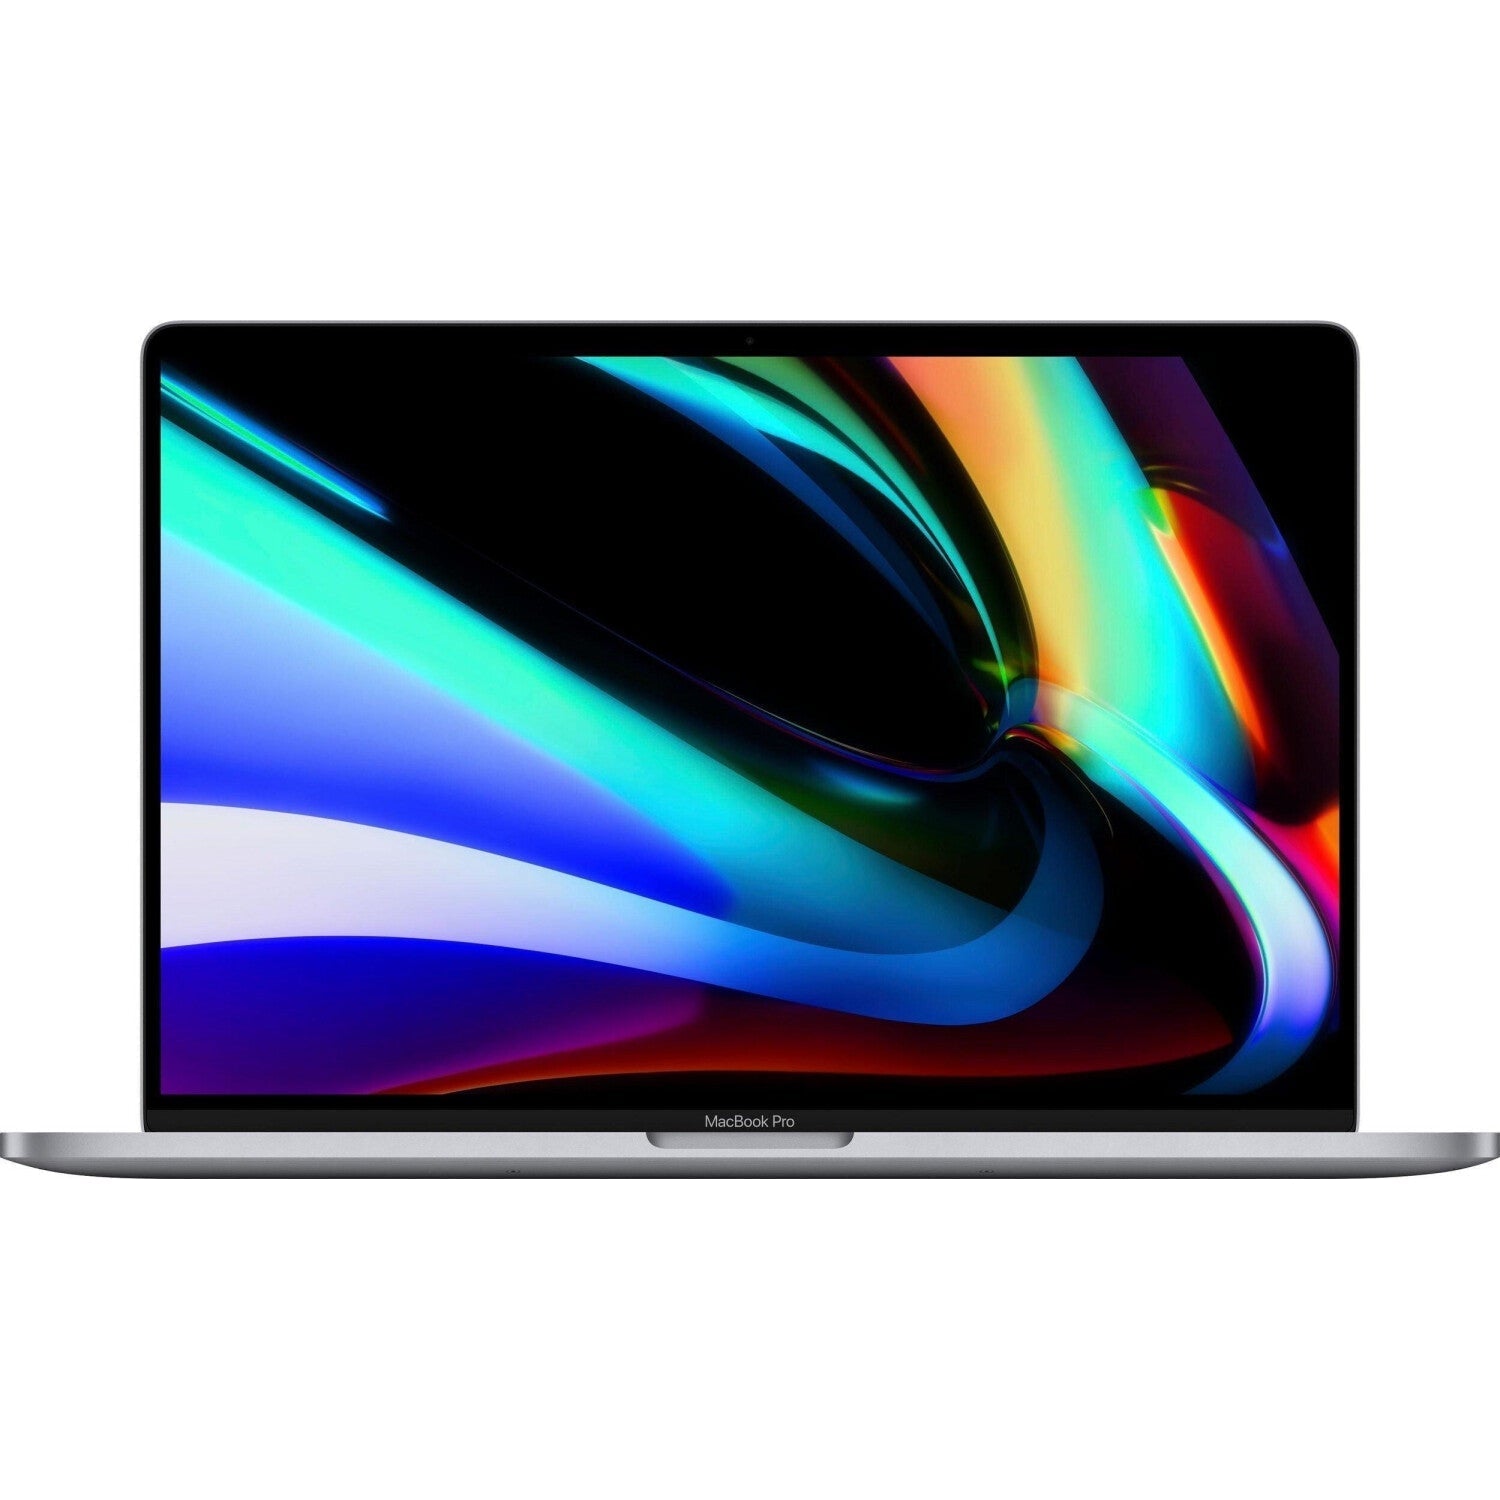 Apple MacBook Pro 16" MVVJ2B/A (2019) Laptop, Intel Core i7, 16GB, 512GB, Space Grey - New